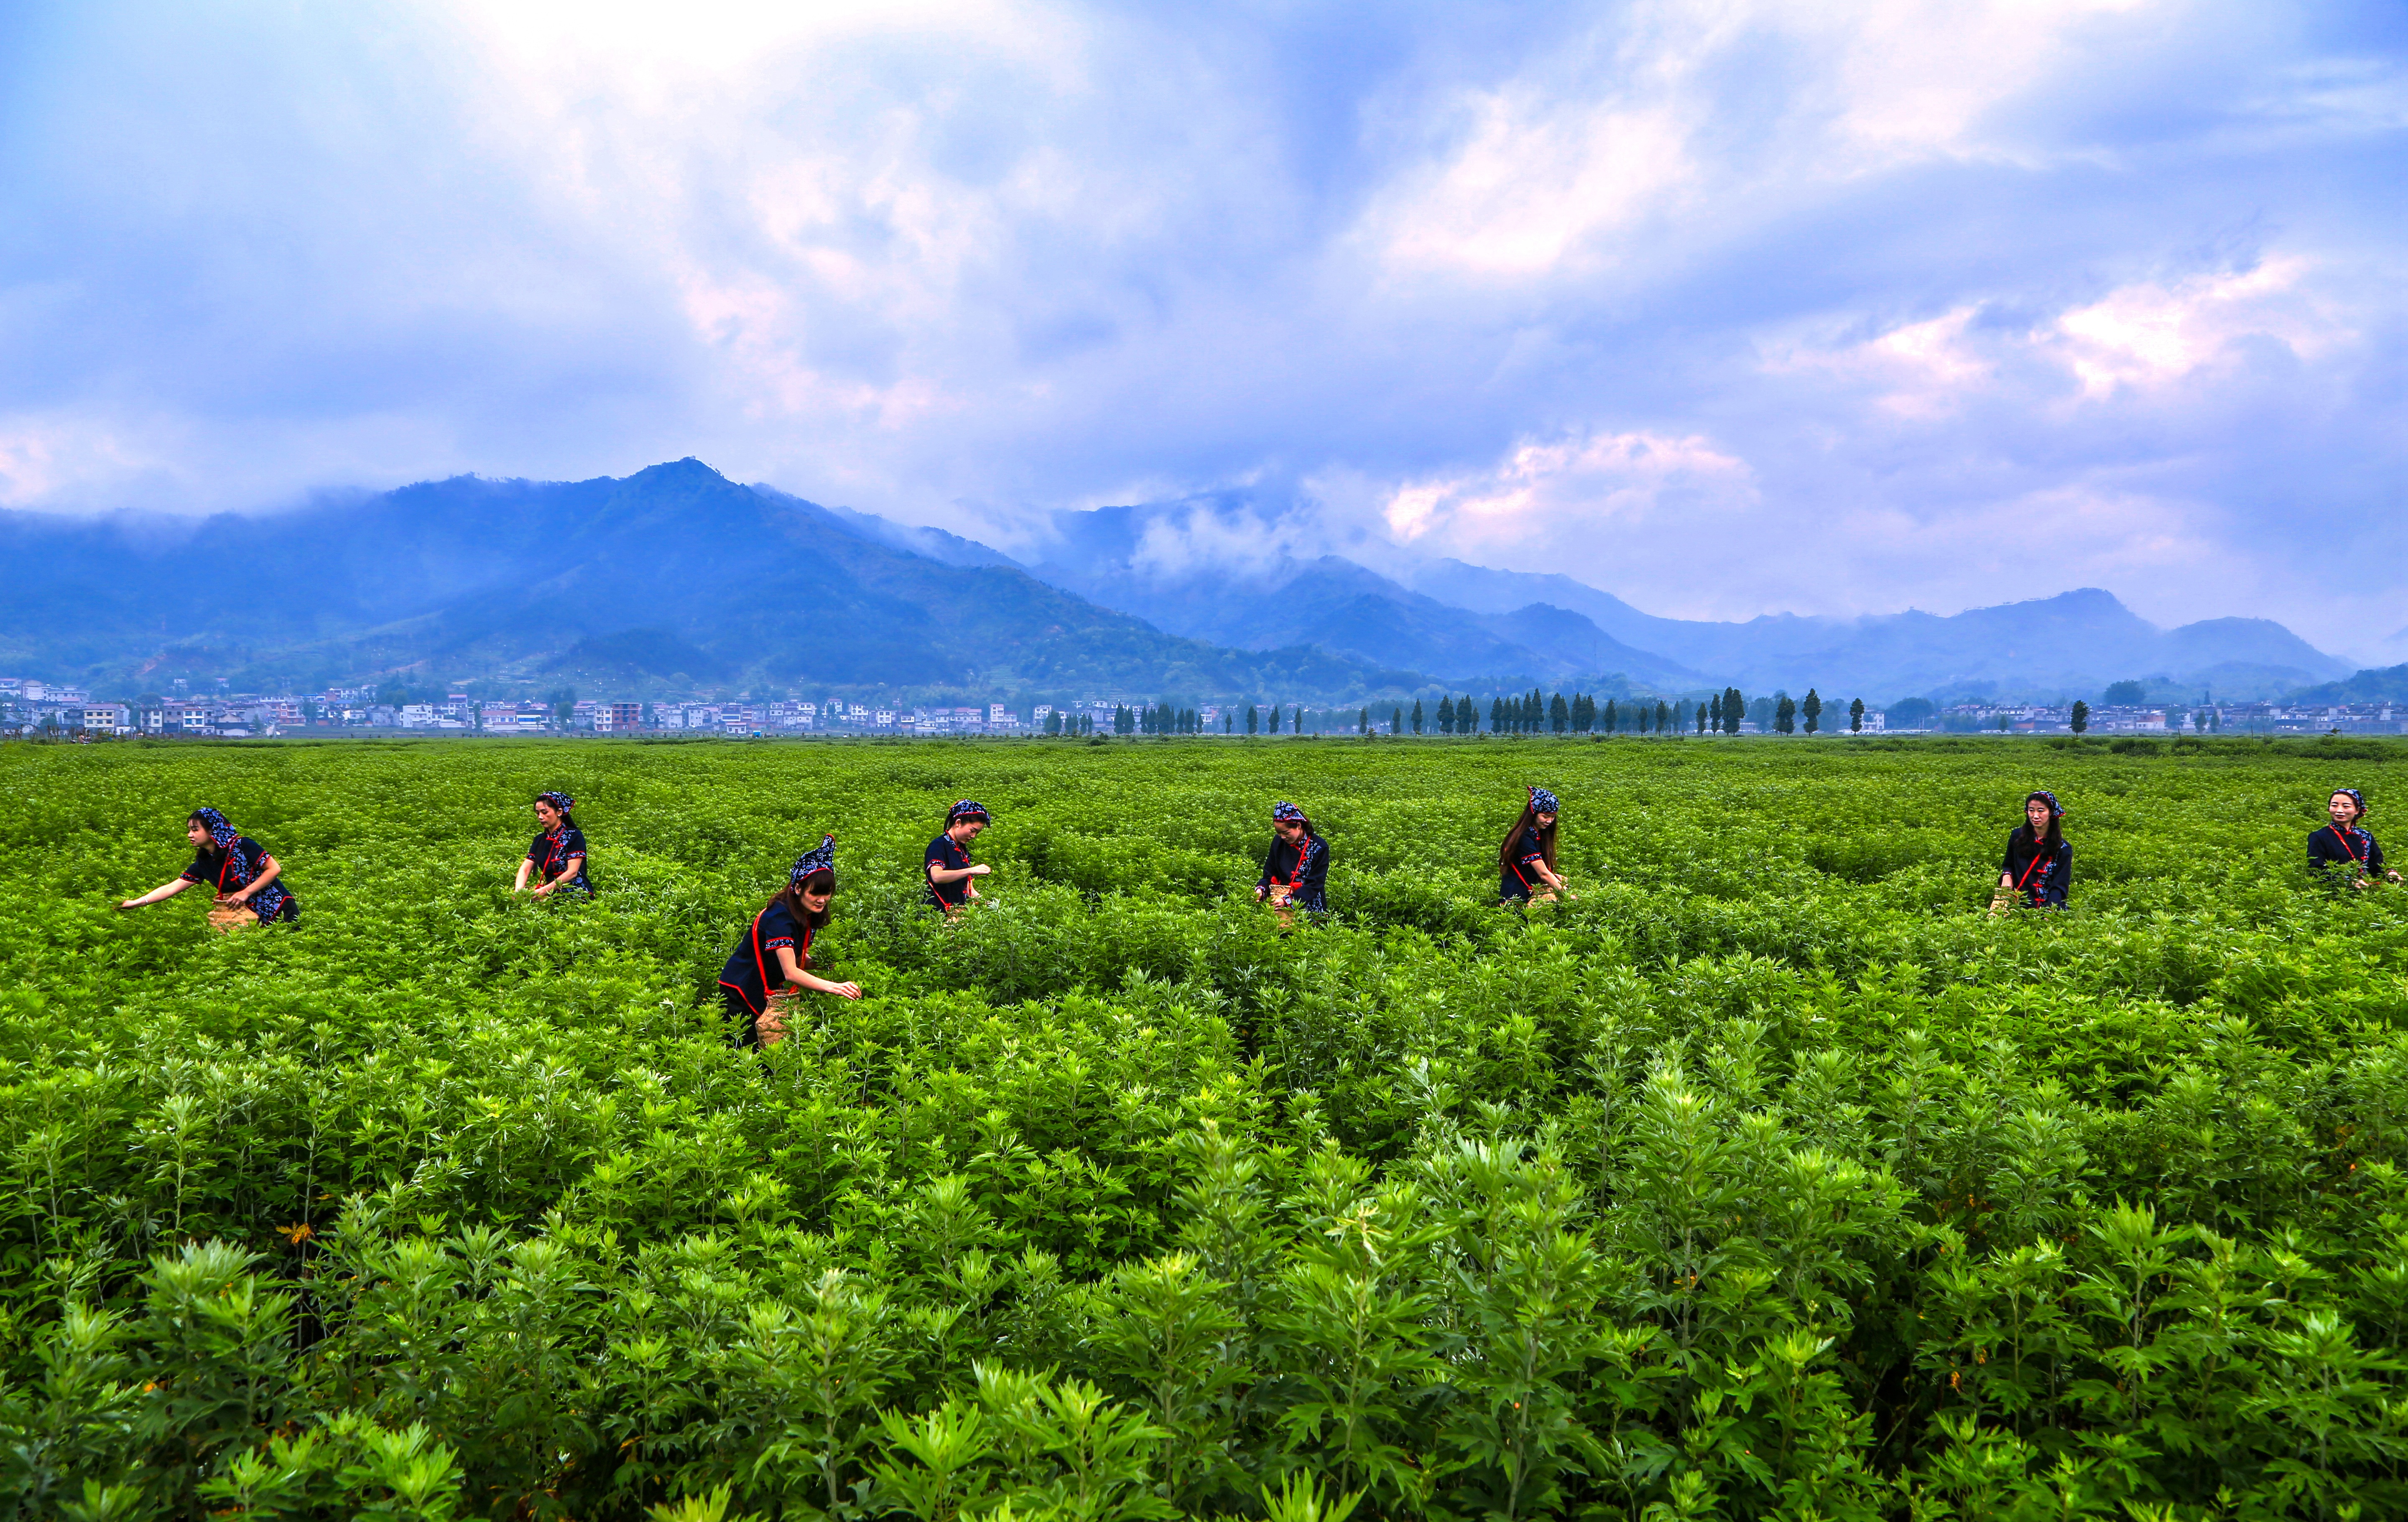 The farmers of Qichun are picking Qiai leaves